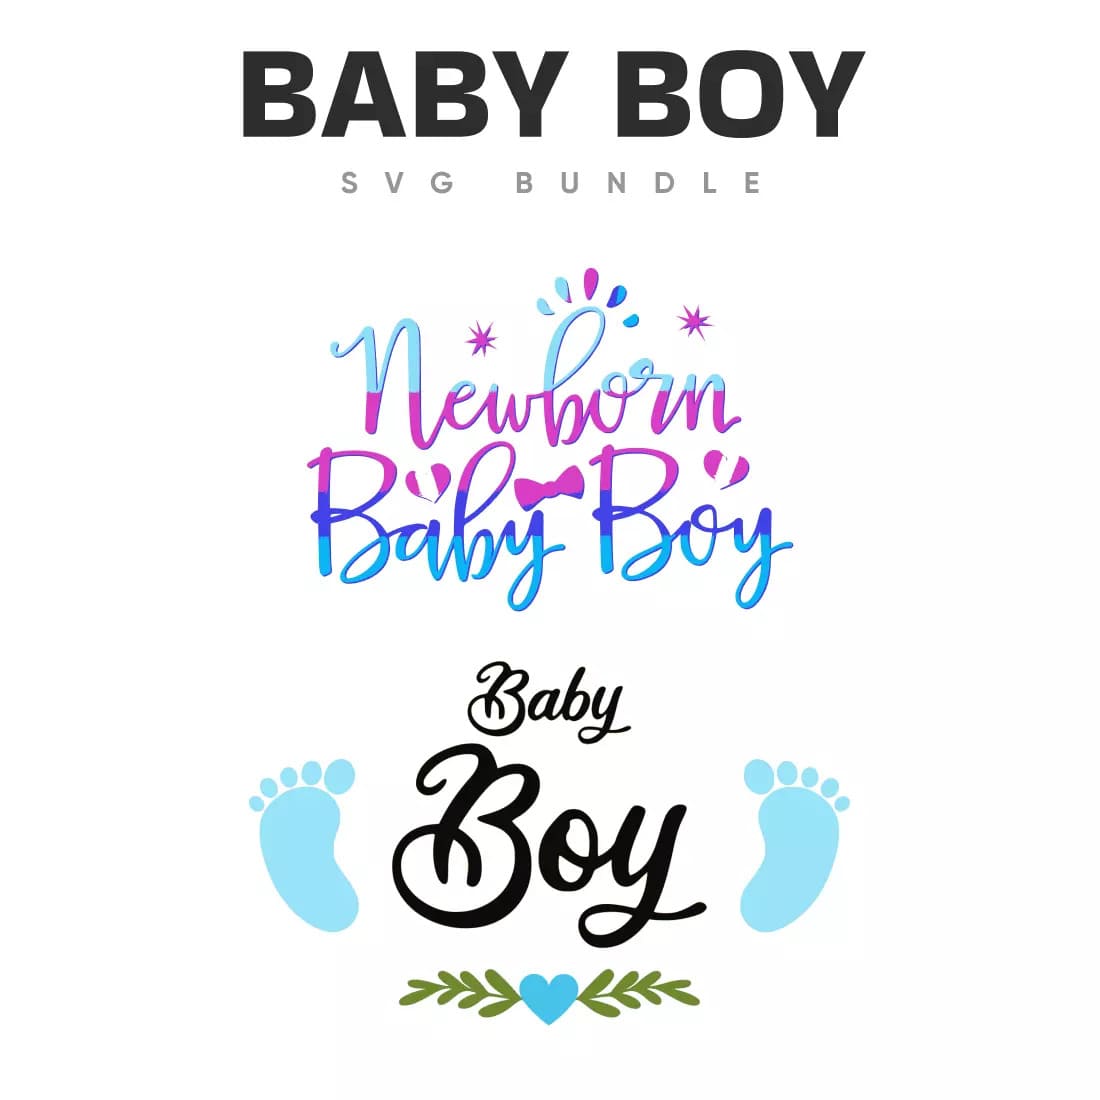 Baby Boy SVG Bundle Preview 3.